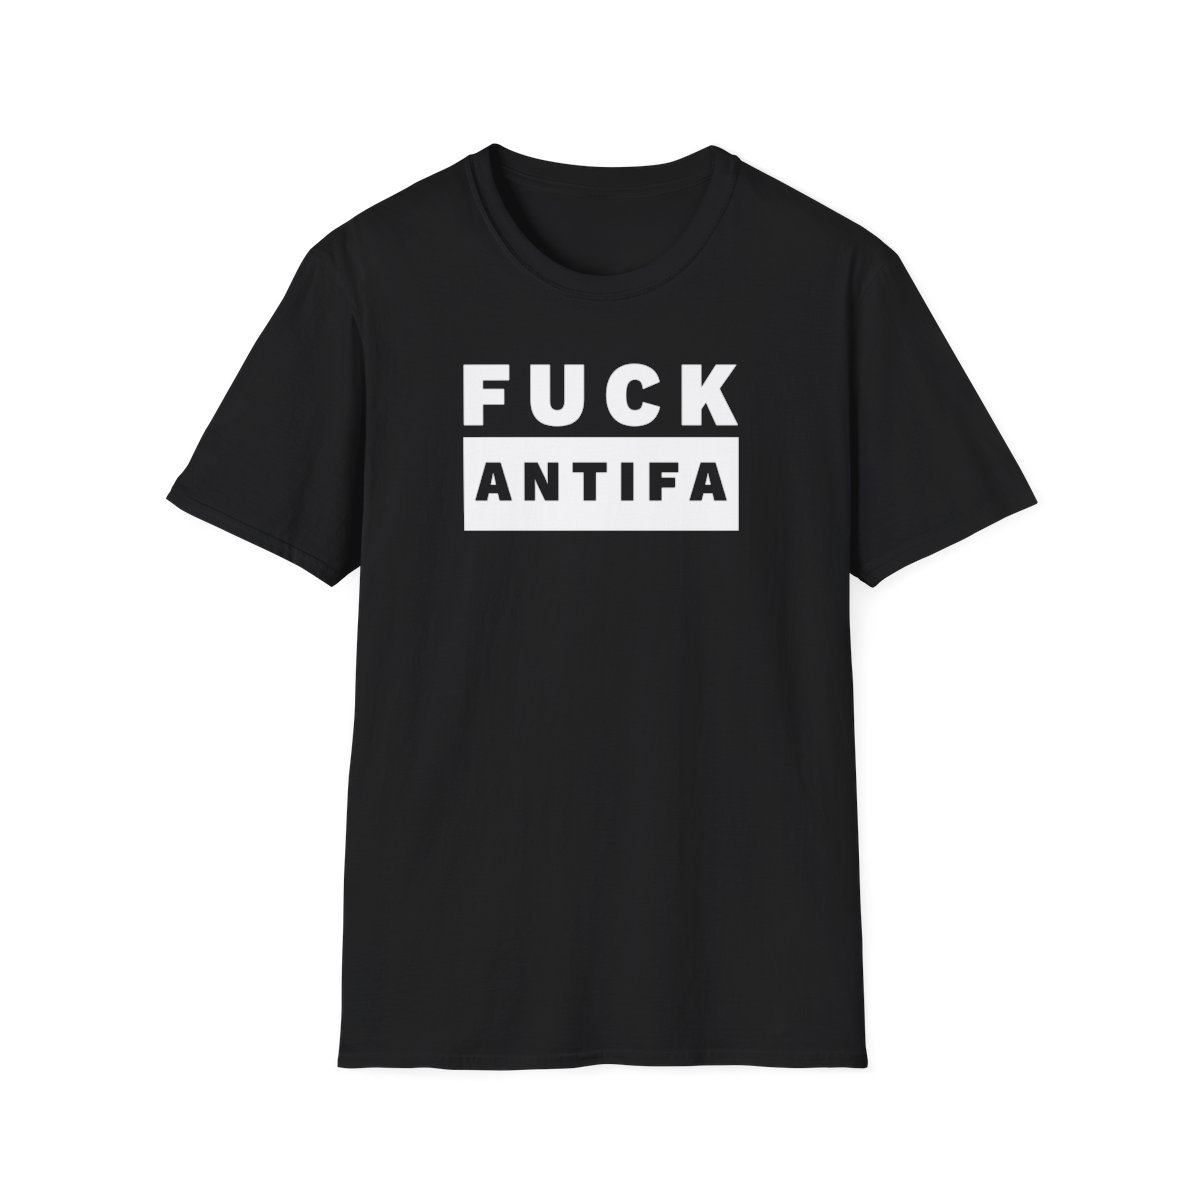 Fuck ANTIFA Short-Sleeve T-Shirt by Trump is Punk Rock